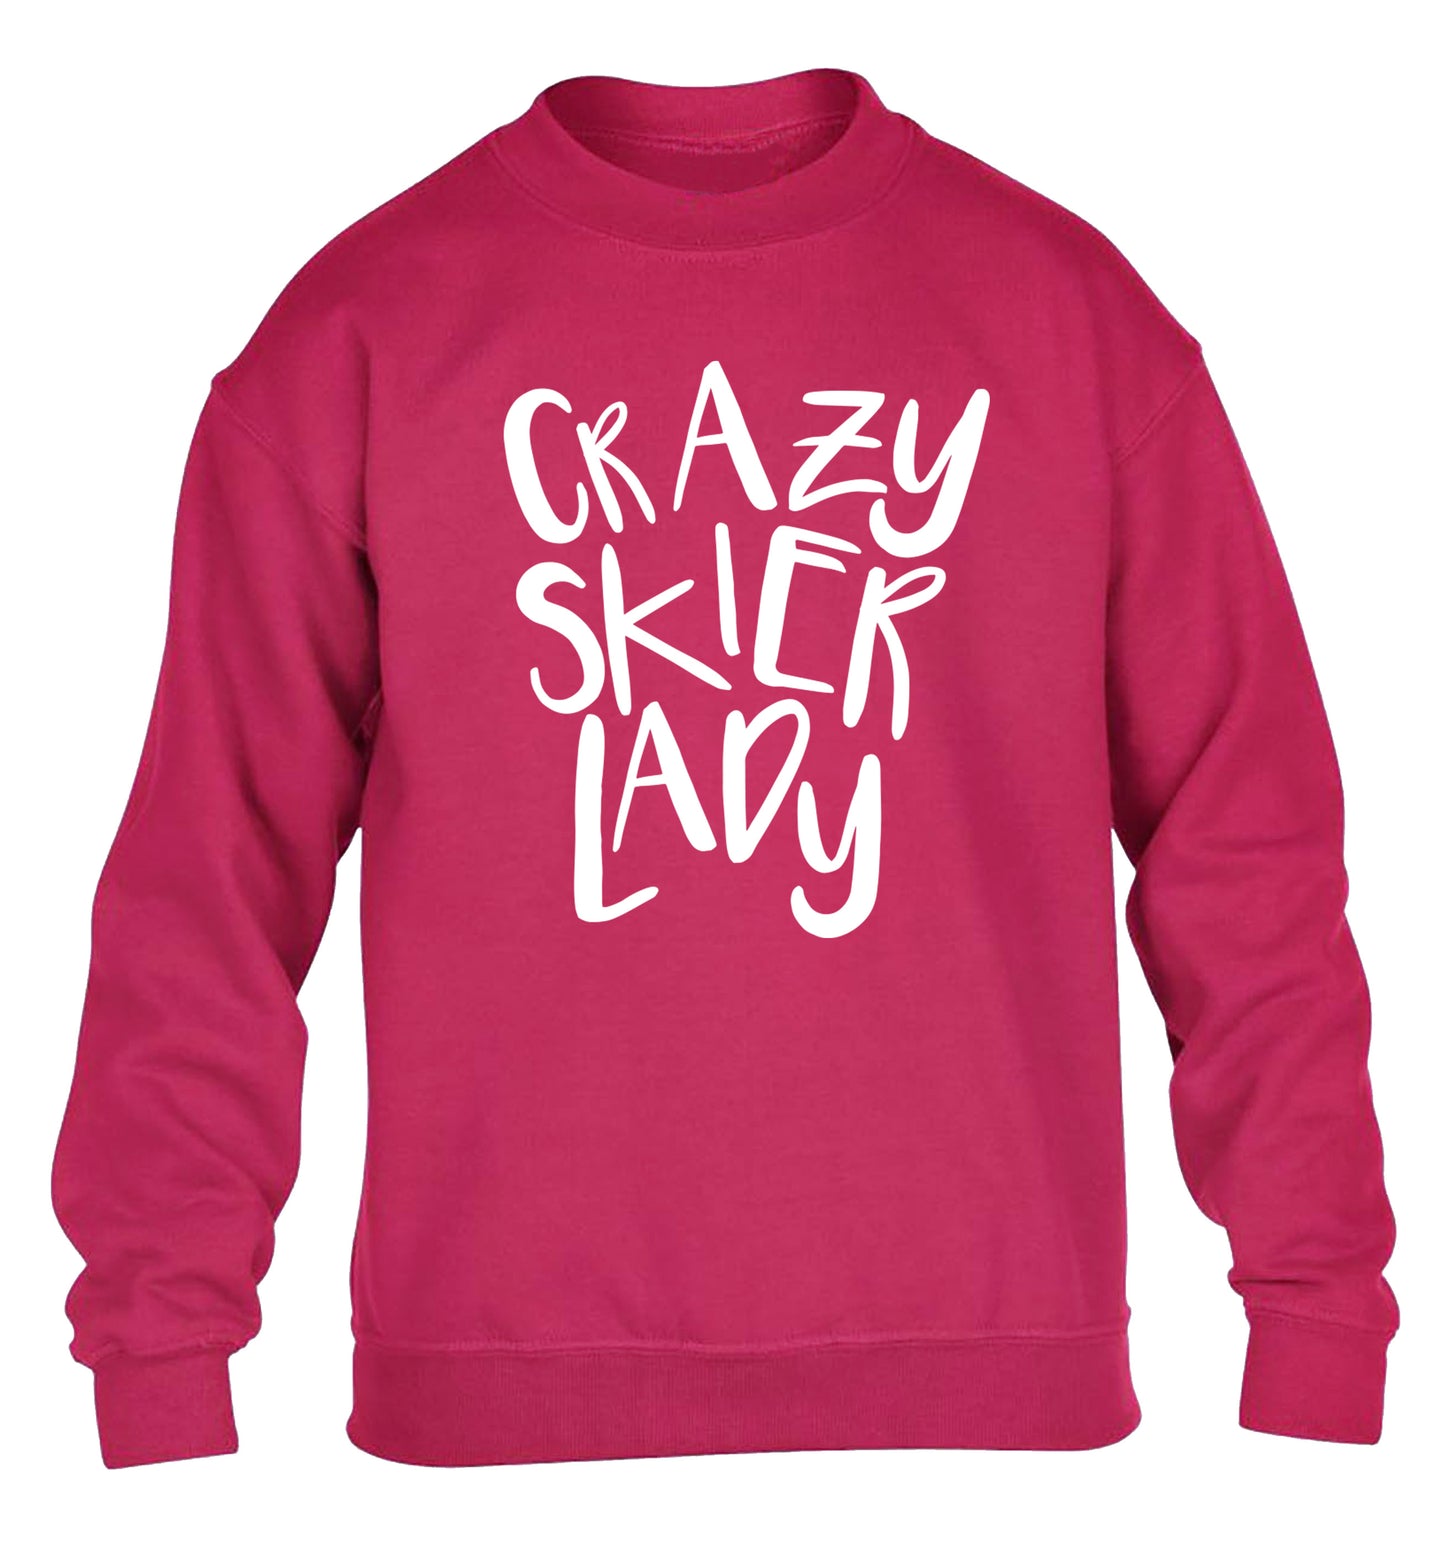 Crazy skier lady children's pink sweater 12-14 Years